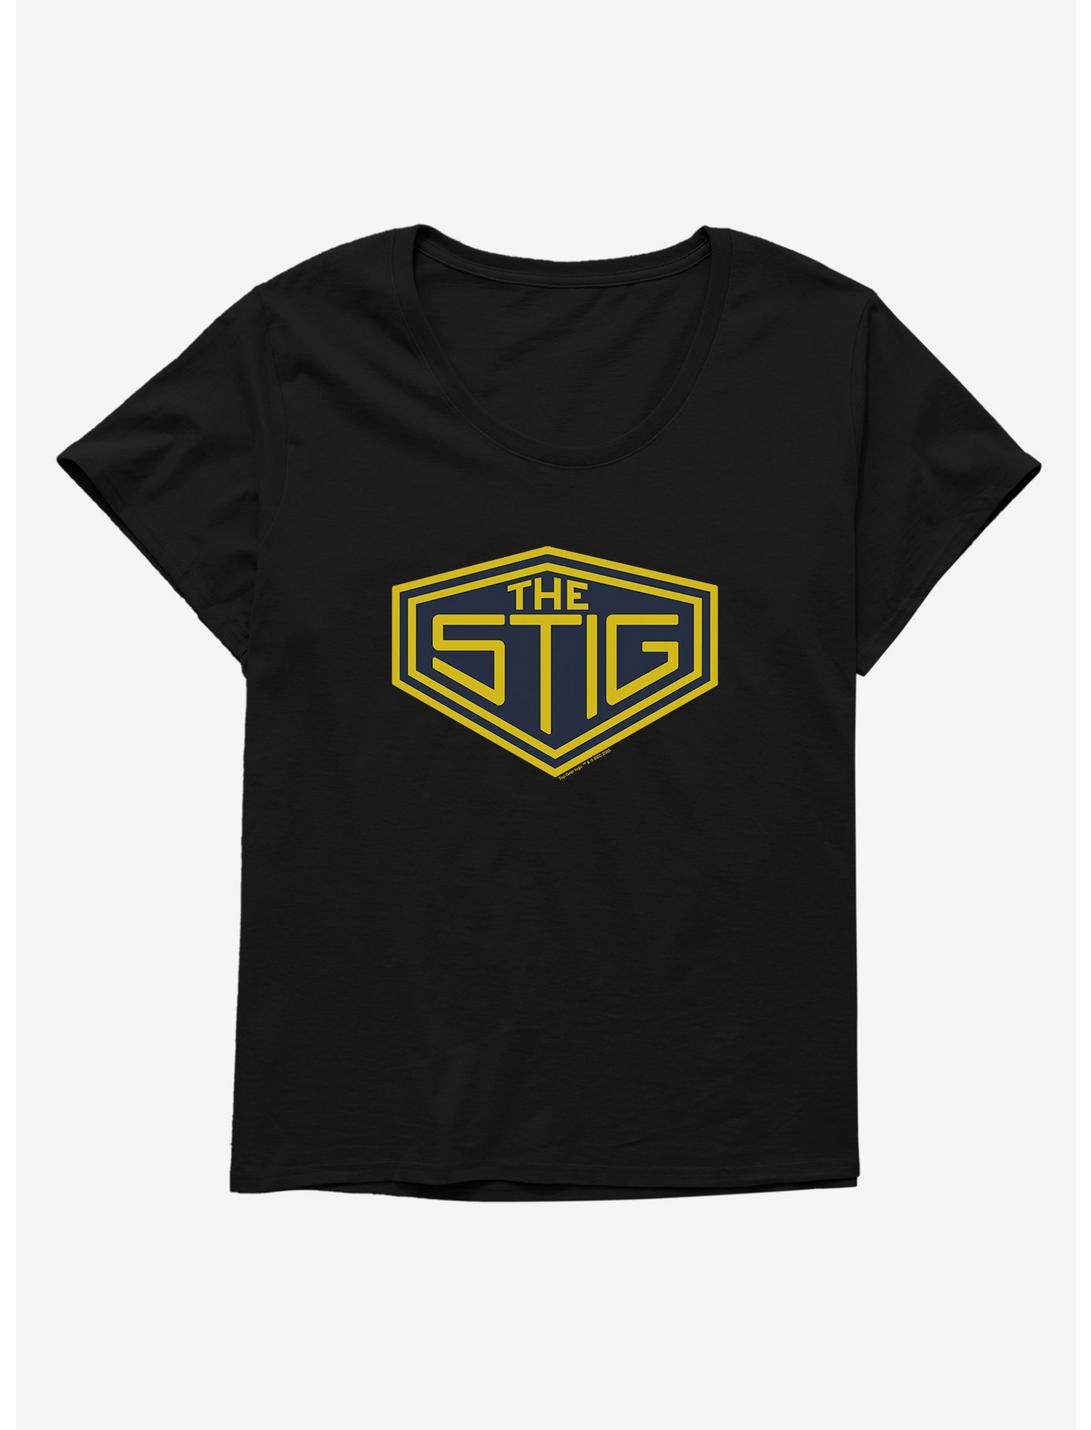 Top Gear Stig Logo Womens T-Shirt Plus Size, , hi-res